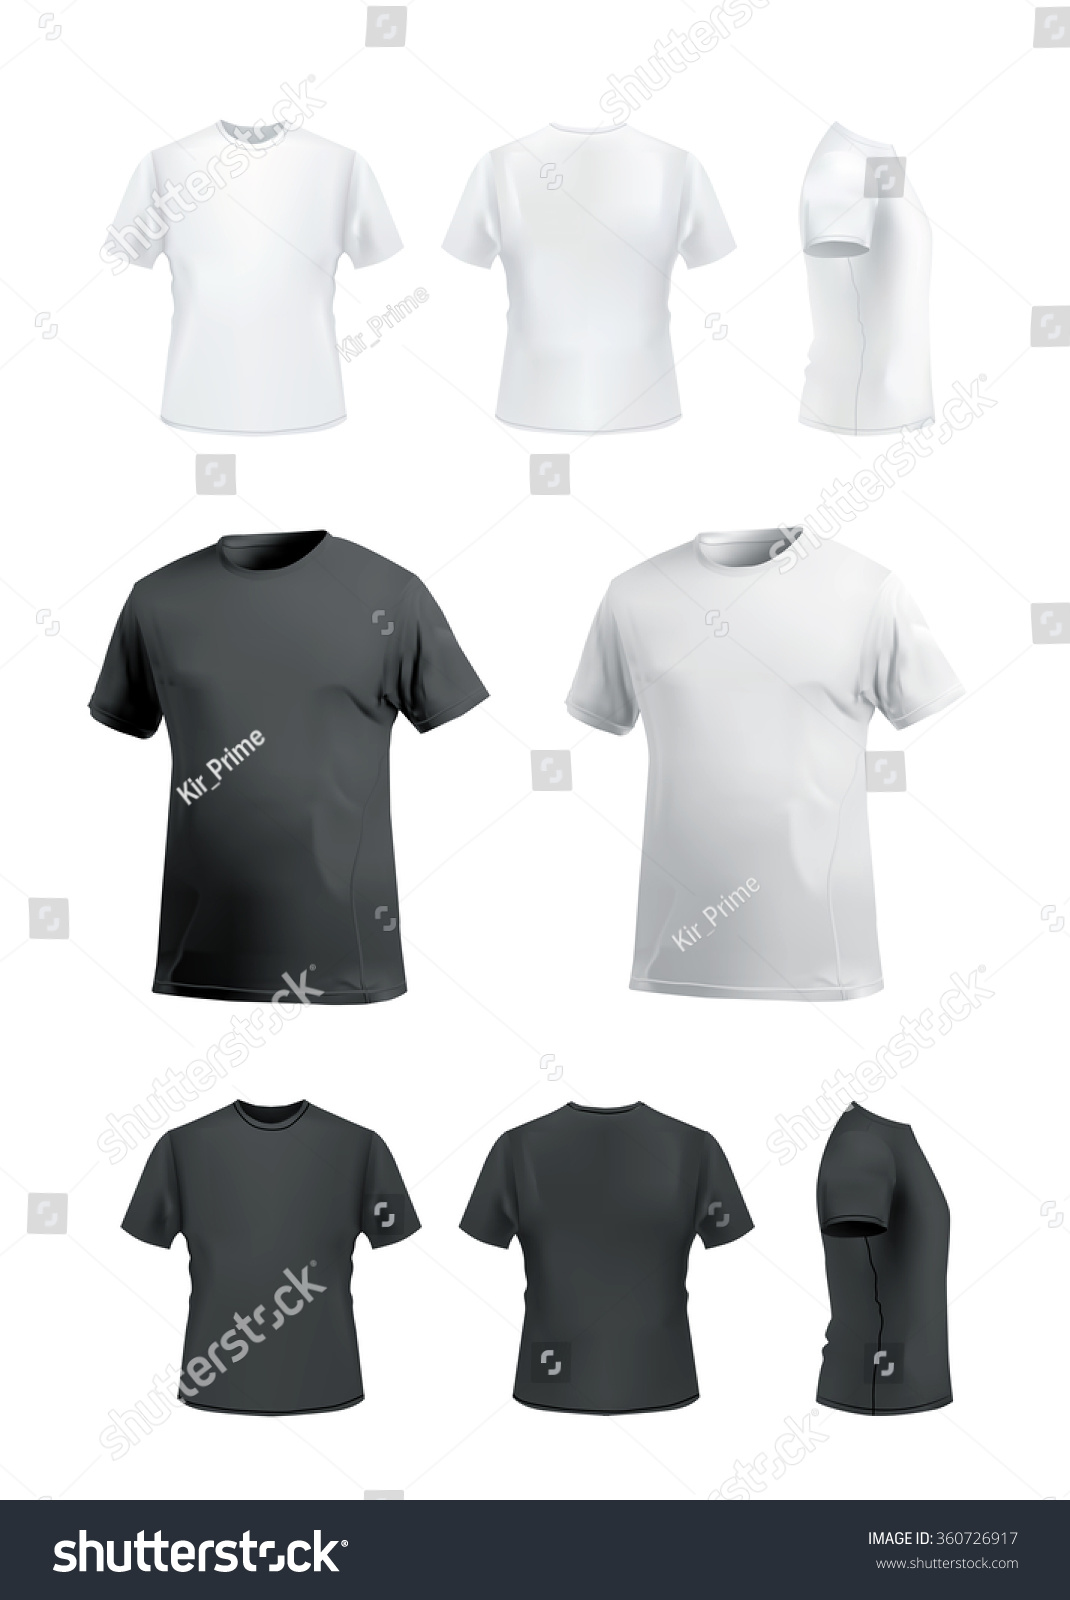 Download Tshirt Mockup Set On White Background Stock Vector ...